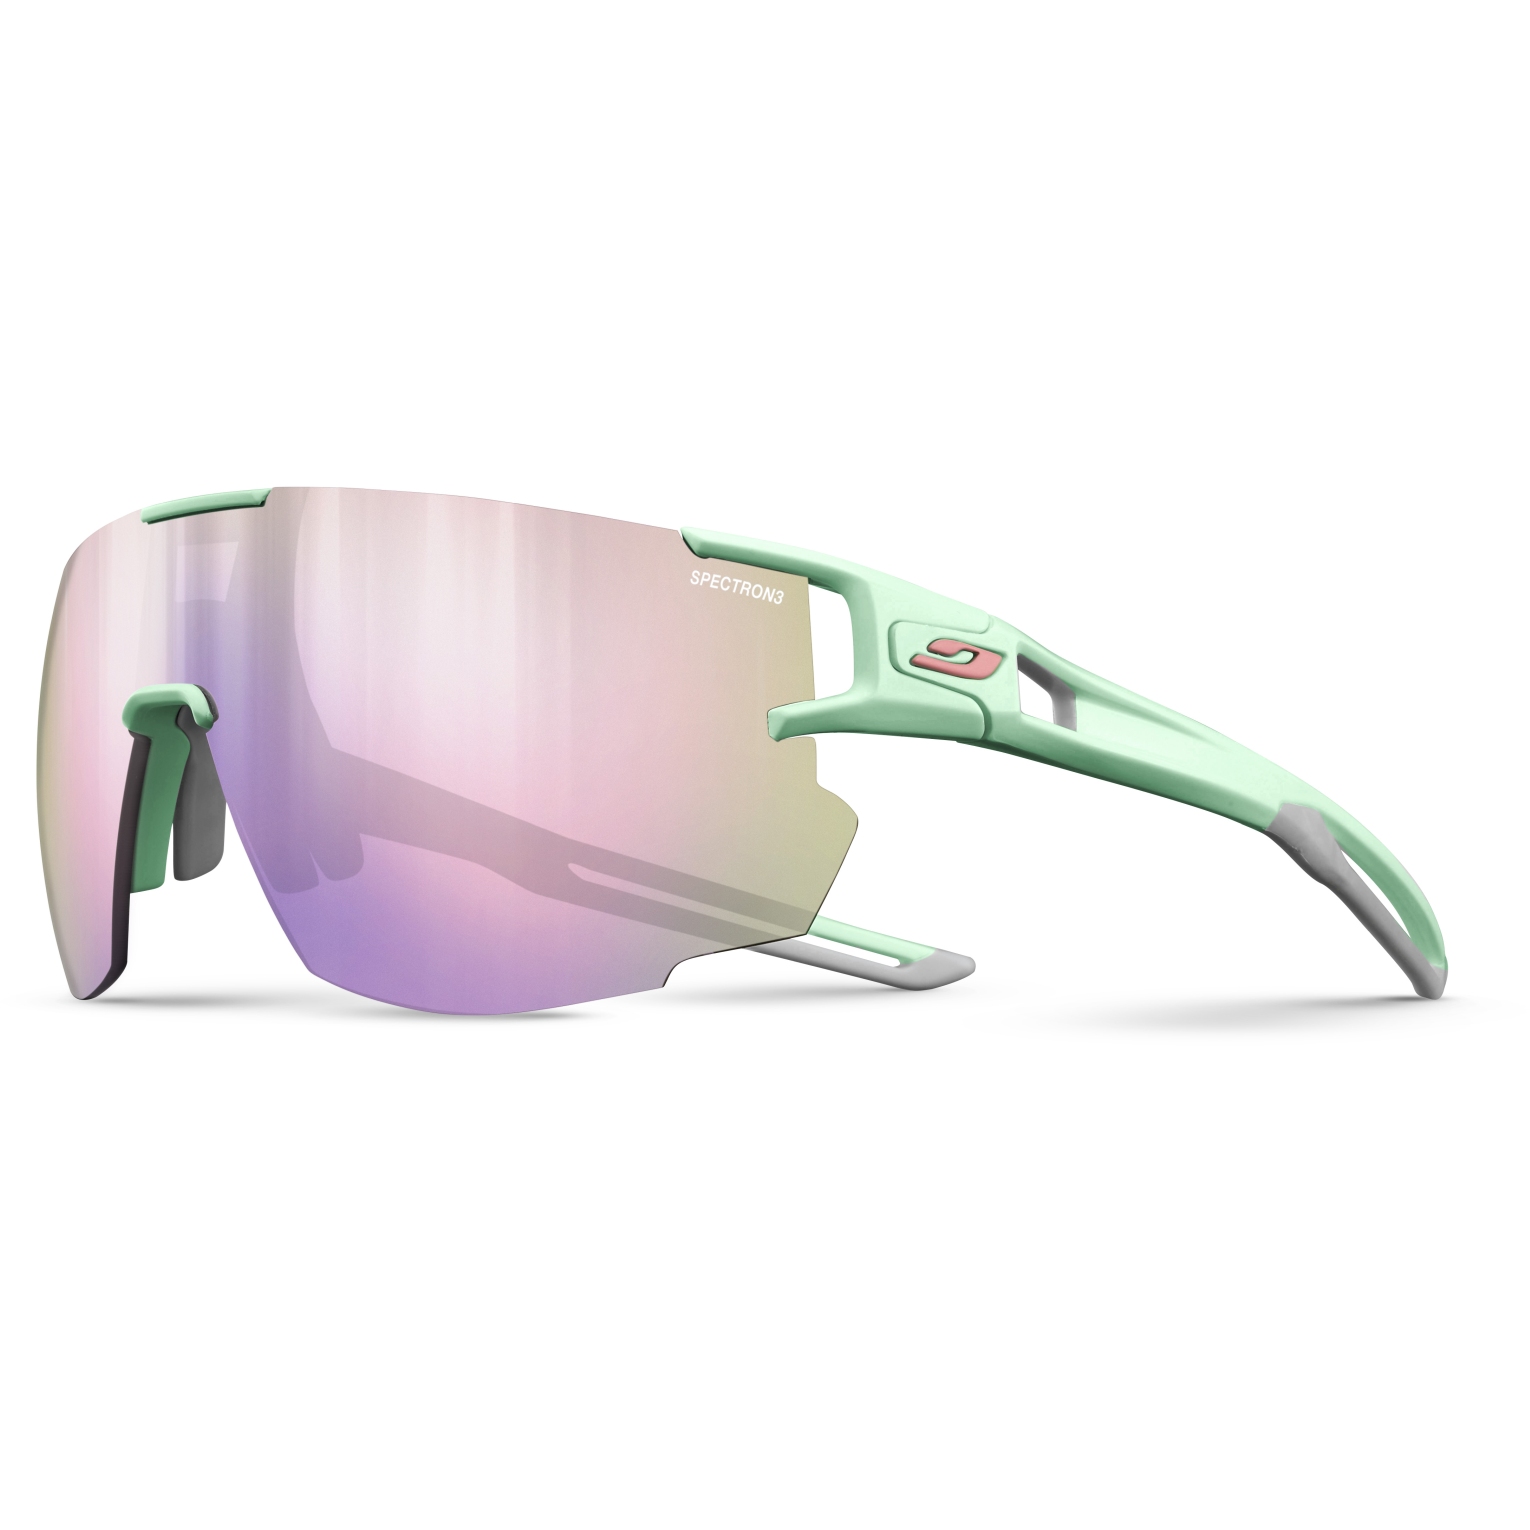 Productfoto van Julbo Aerospeed Spectron 3CF Sunglasses - Mint / Grey